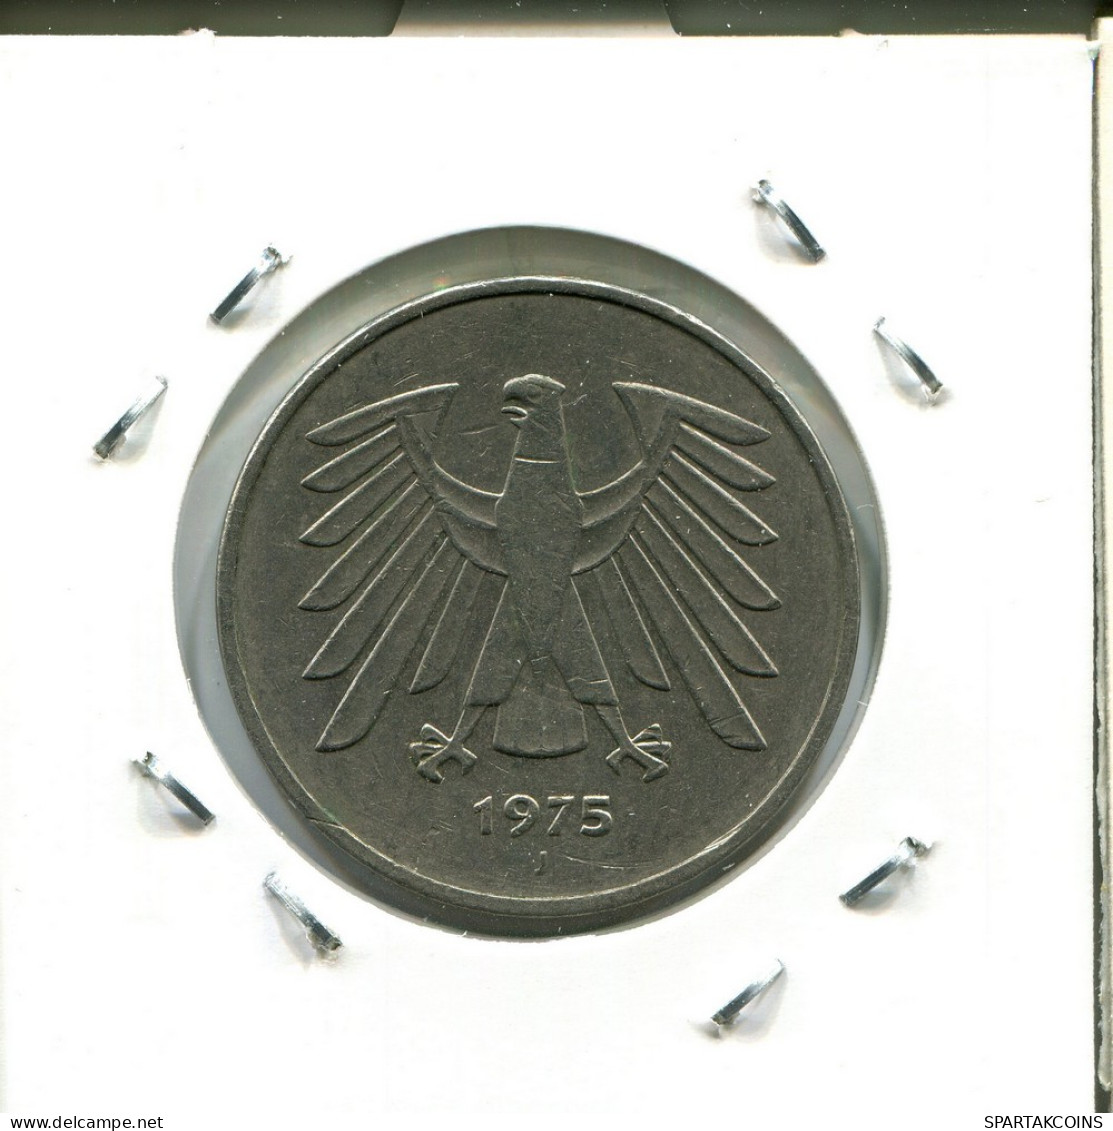 5 DM 1975 J BRD ALEMANIA Moneda GERMANY #AU757.E - 5 Mark